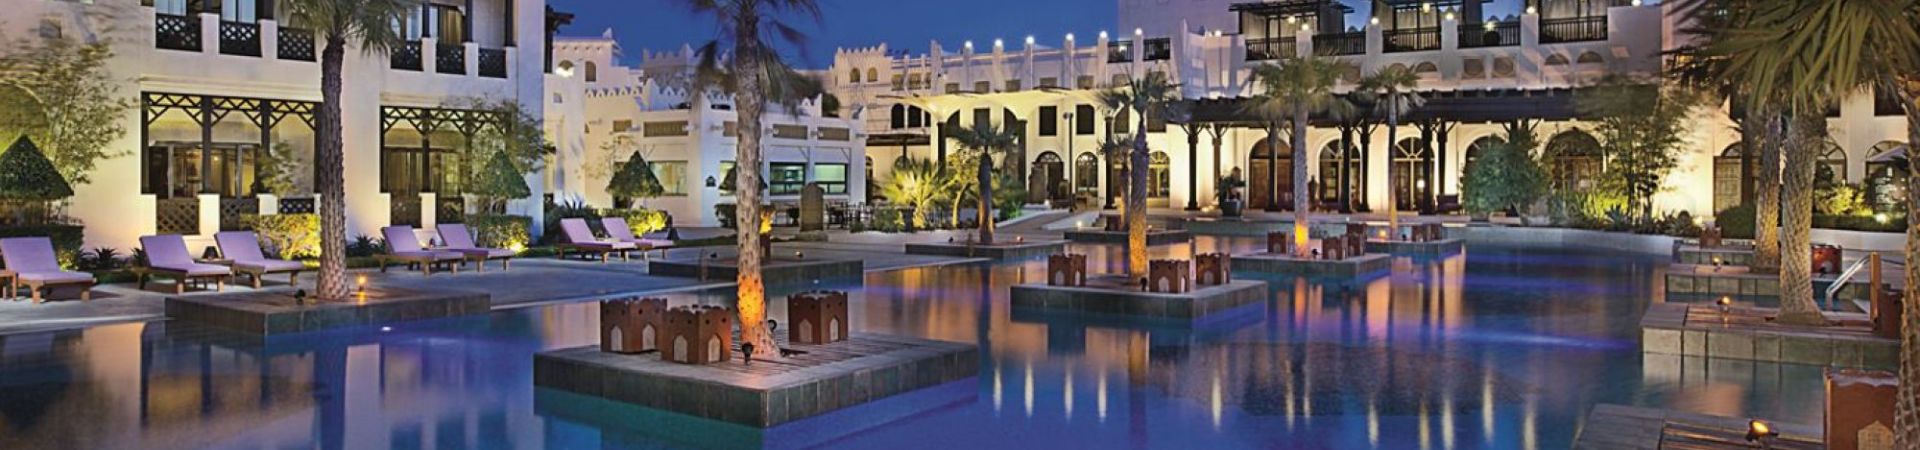 Sharq Village & Spa, a Ritz-Carlton Hotel doha qatar